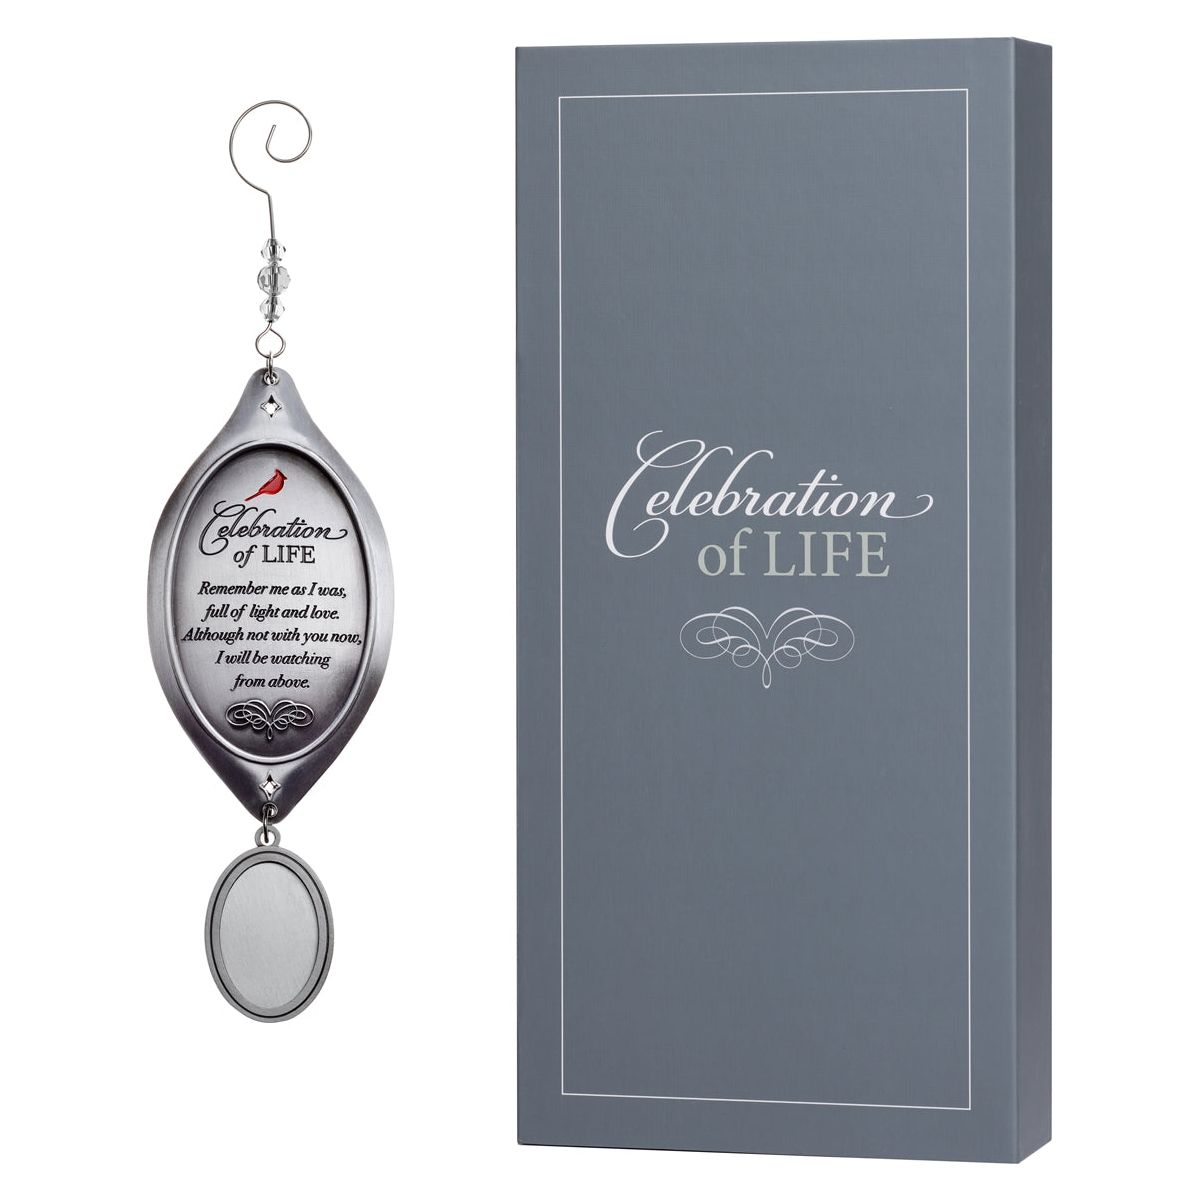 Celebration of Life ornament alongside it&#39;s high quality gray box.